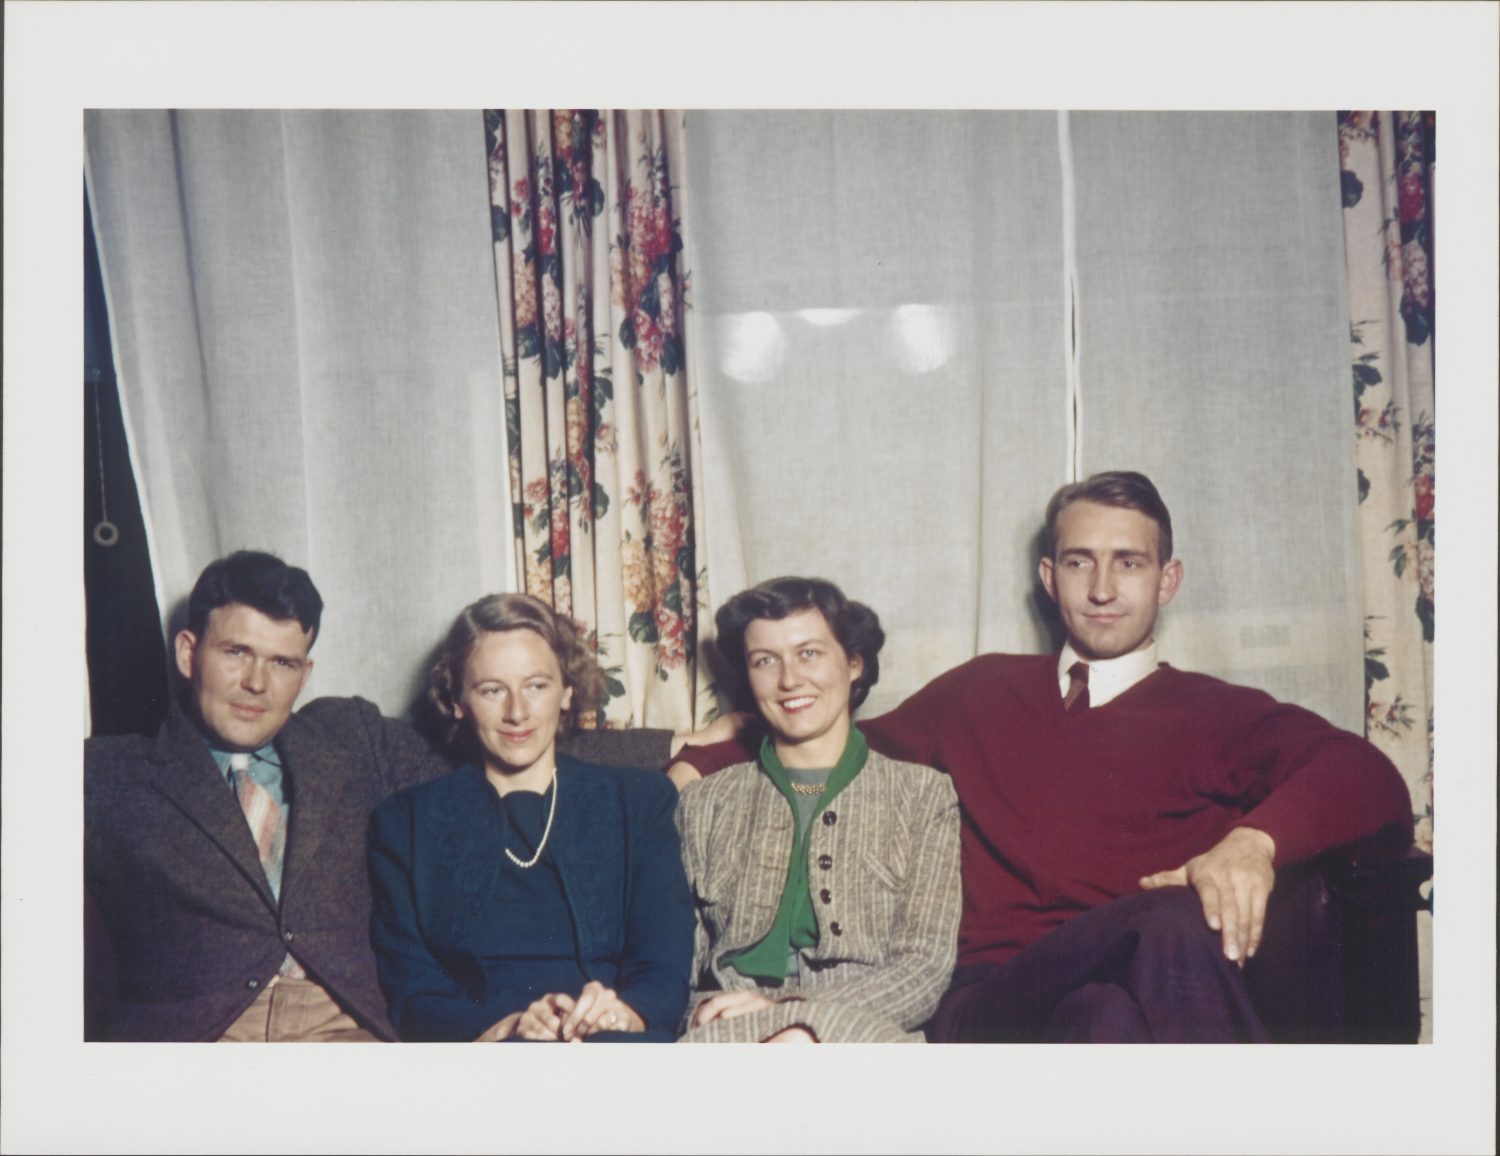 From left to right: Bill Hewlett, Flora Hewlett, Lucile Packard and Dave Packard.